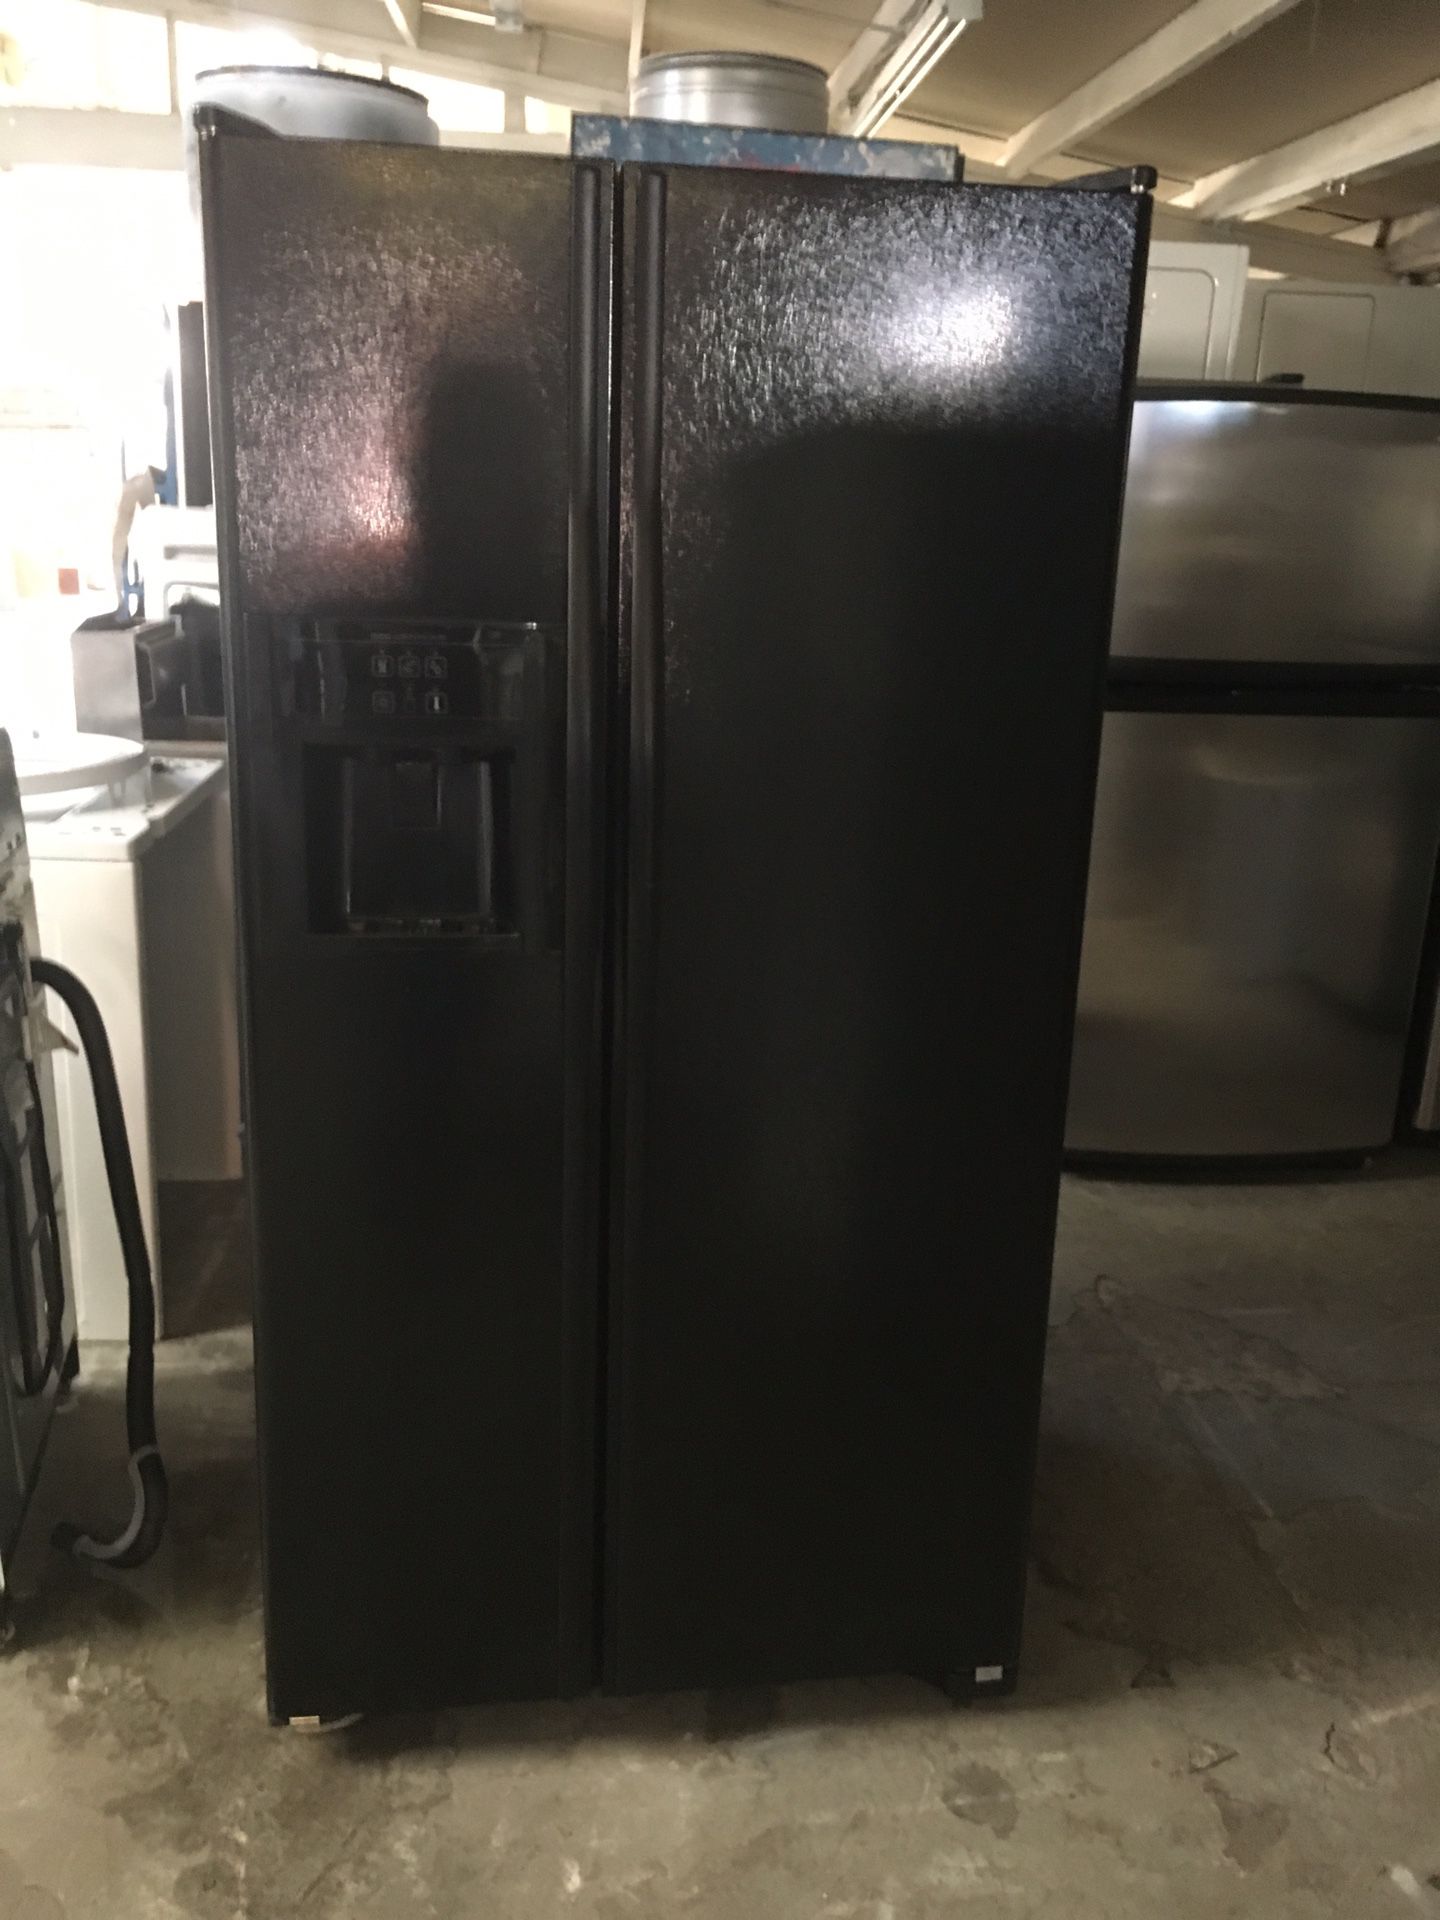 Refrigerator brand JENN-AIR everything is good working condition 90 days warranty